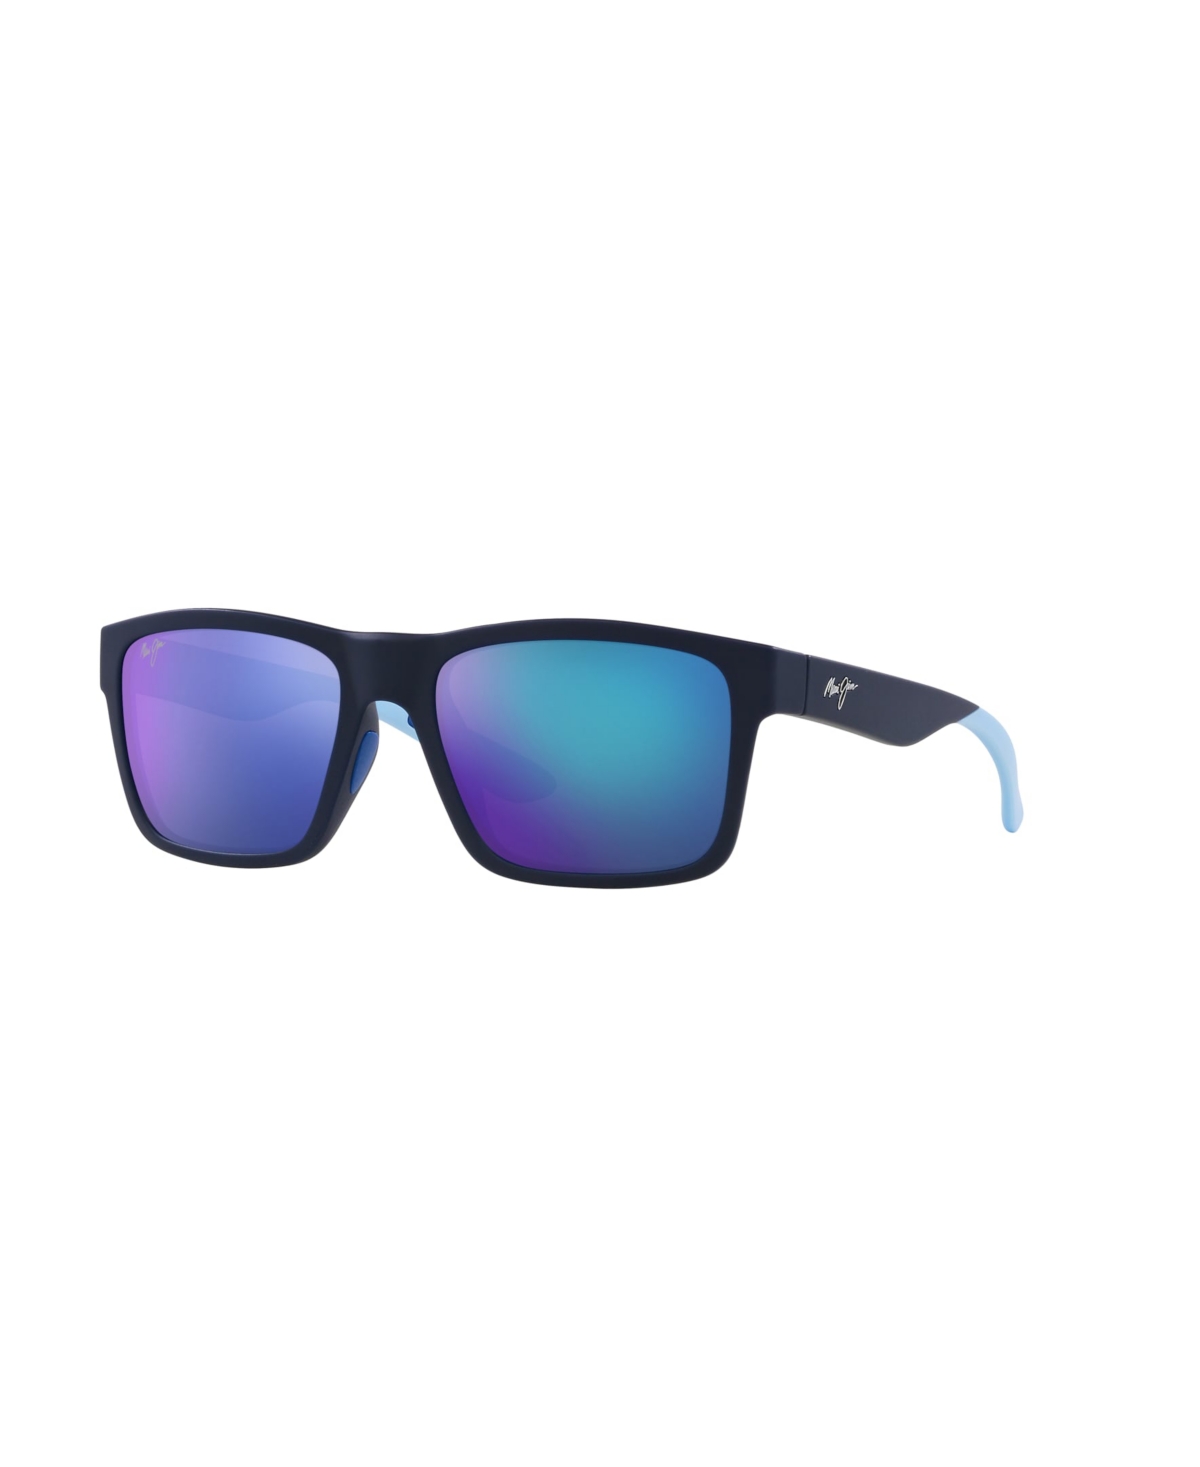 Maui Jim Unisex Polarized Sunglasses, The Flats Mj000738 In Blue Multicolor